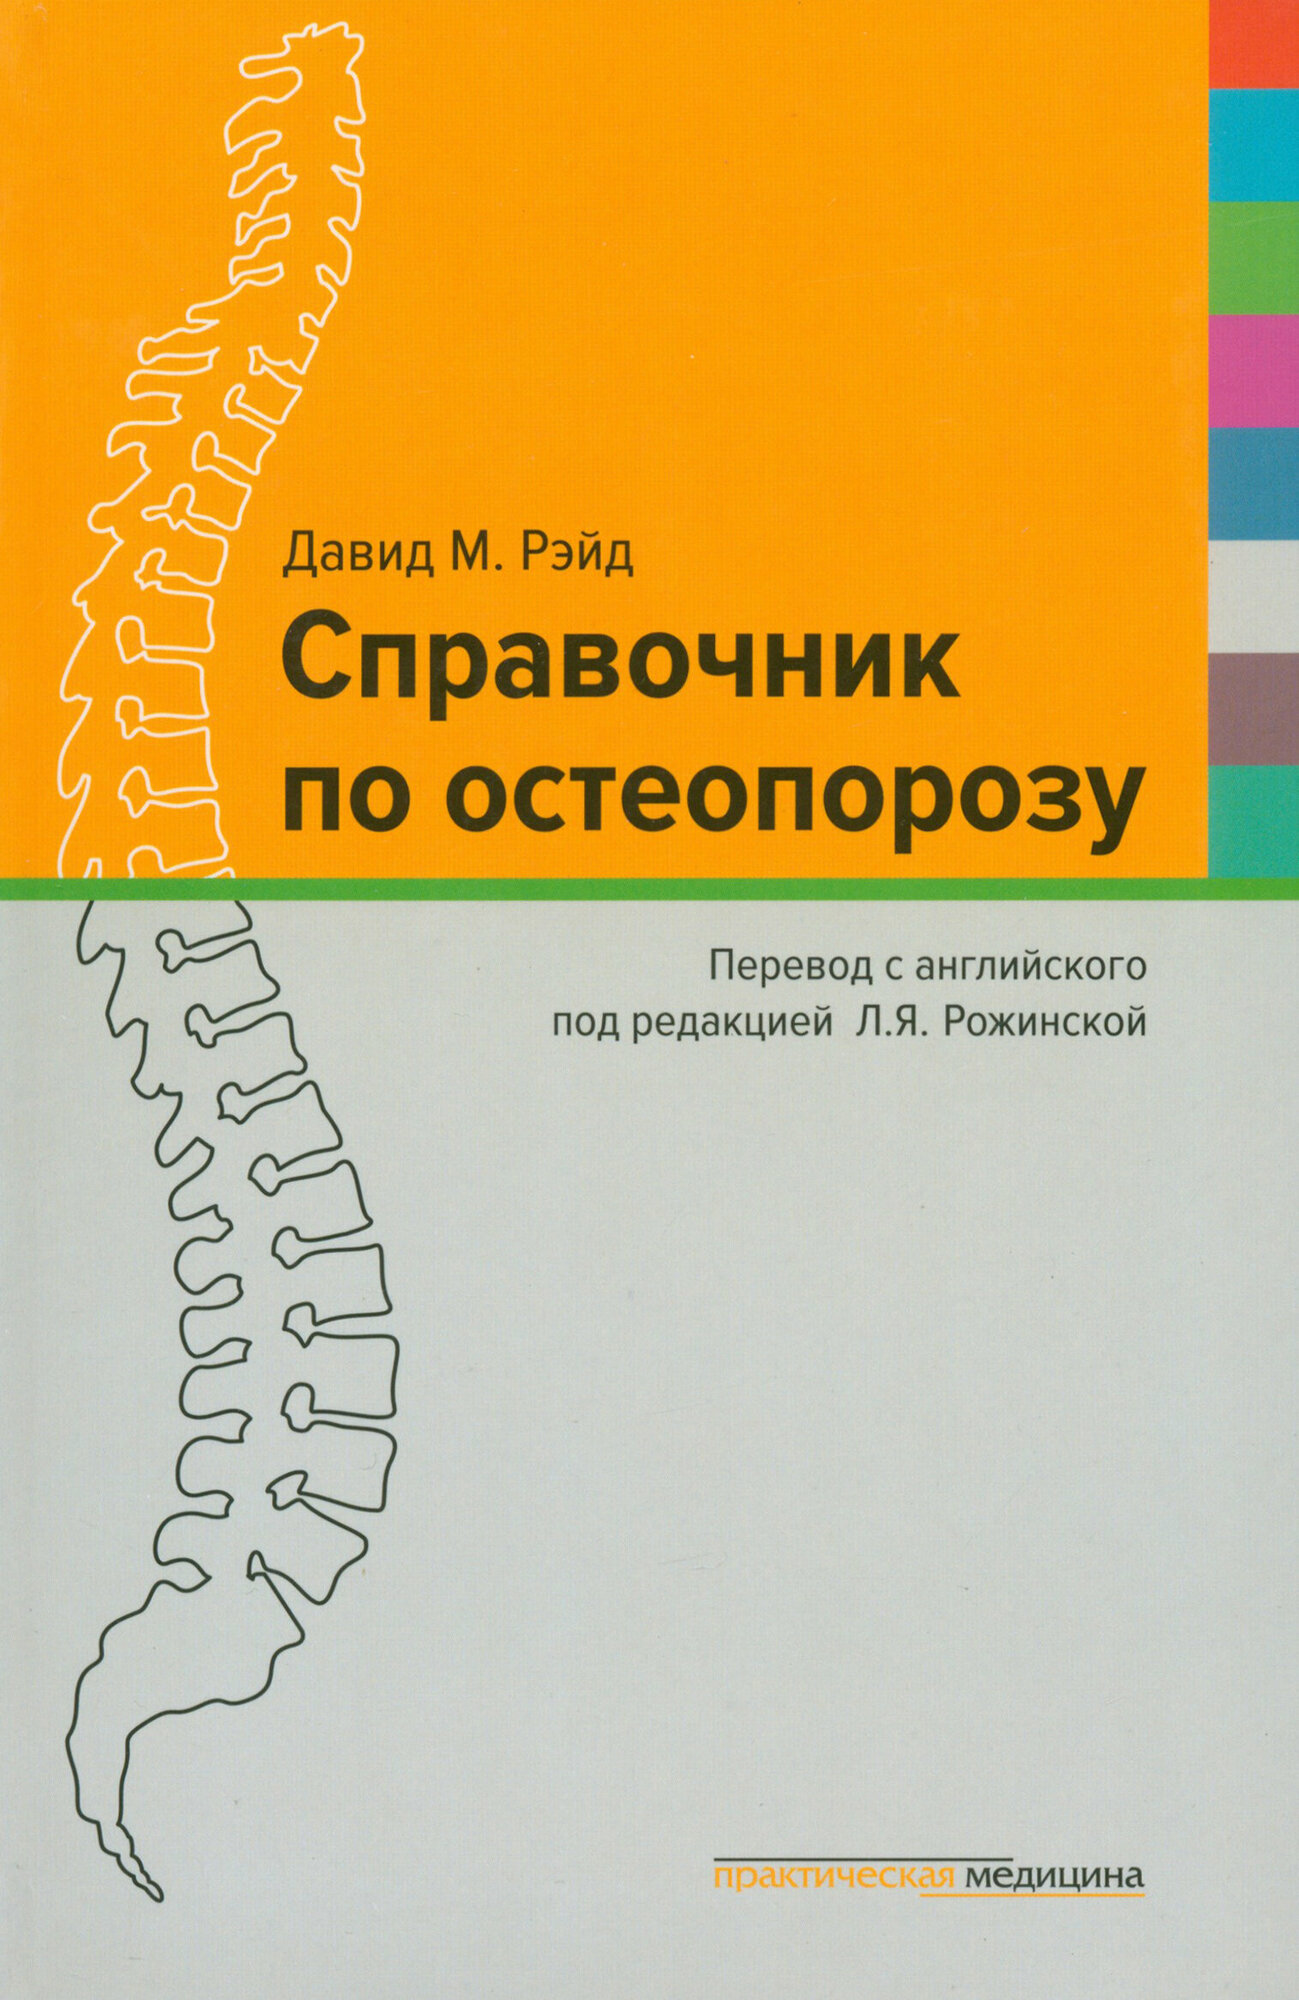 Справочник по остеопорозу (Рэйд Давид М.) - фото №18